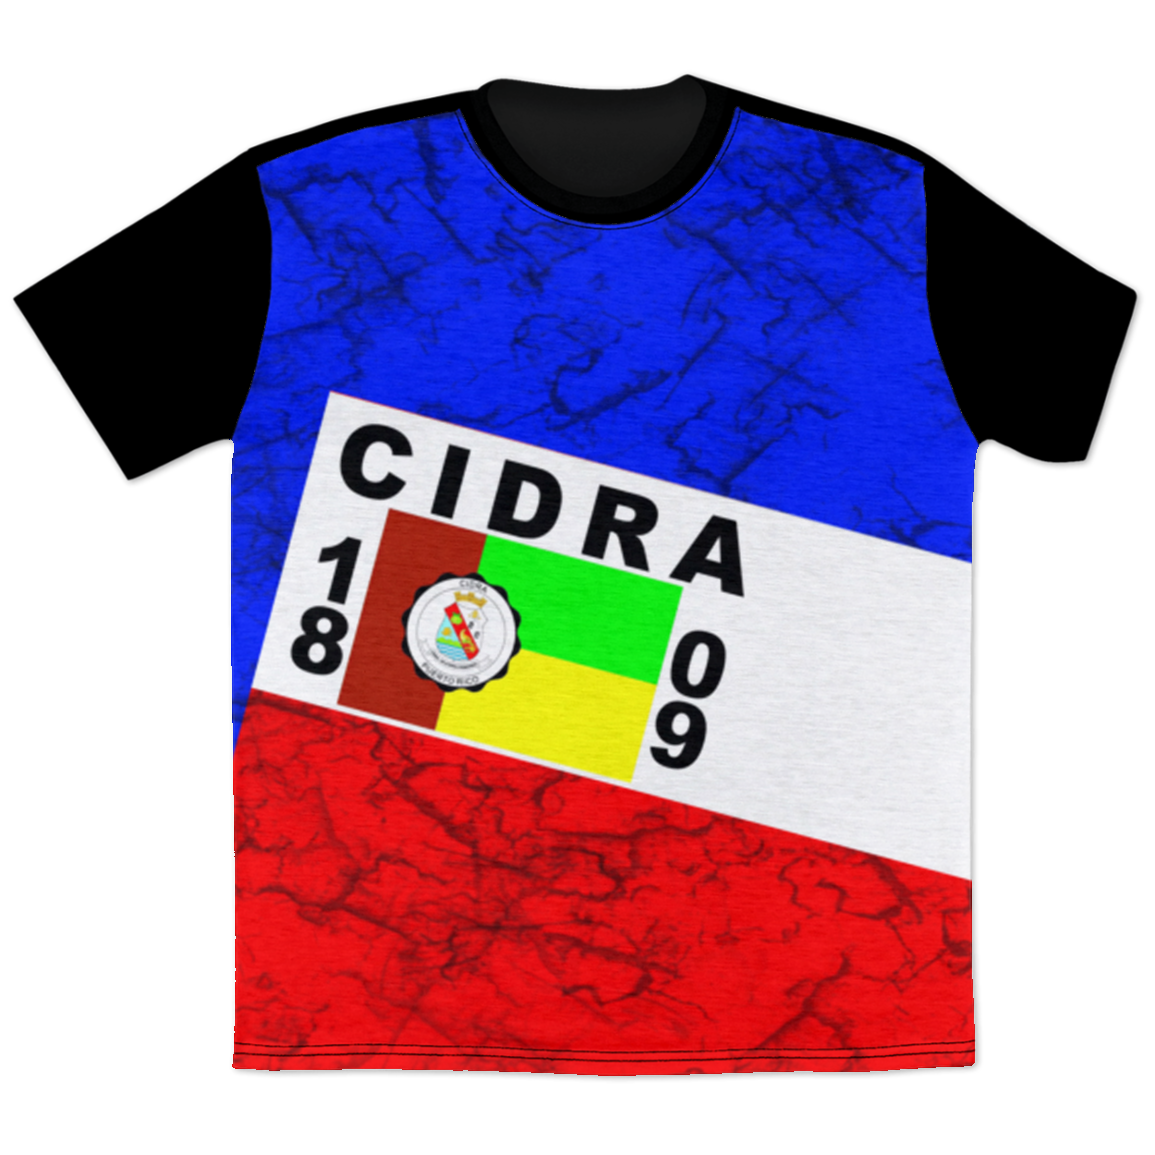 Cidra T-Shirt - Puerto Rican Pride